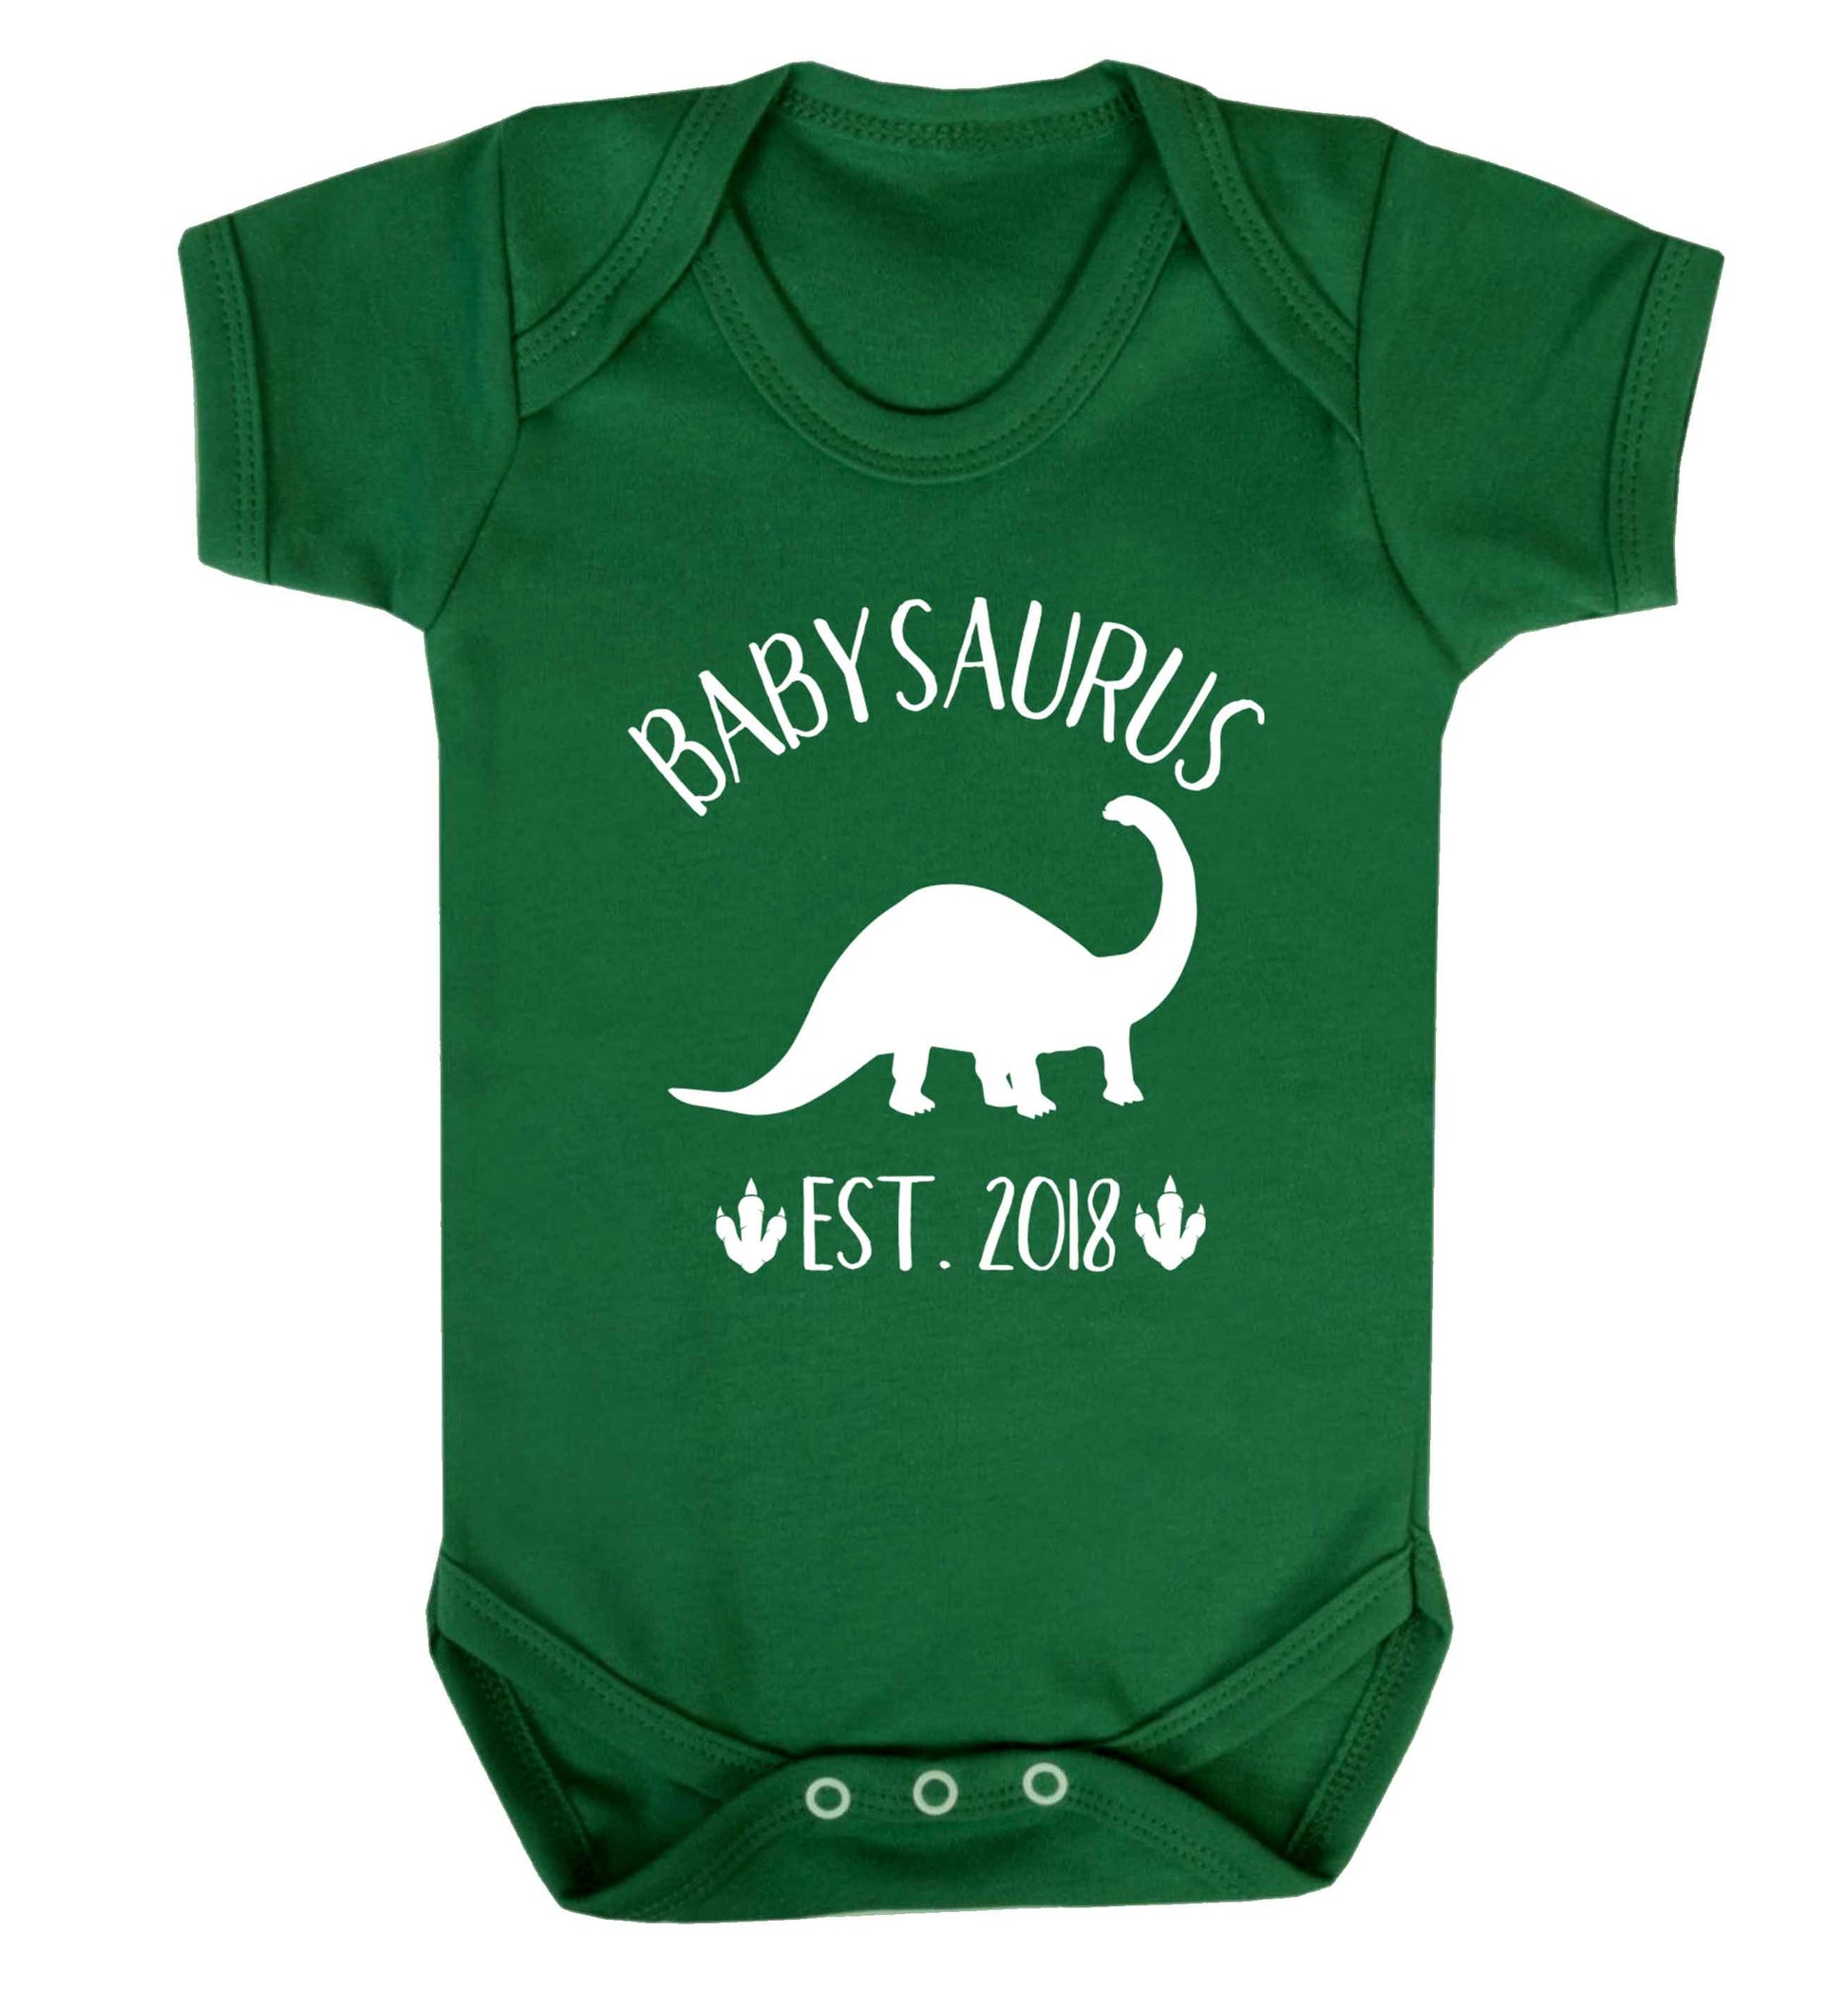 Personalised babysaurus since (custom date) Baby Vest green 18-24 months